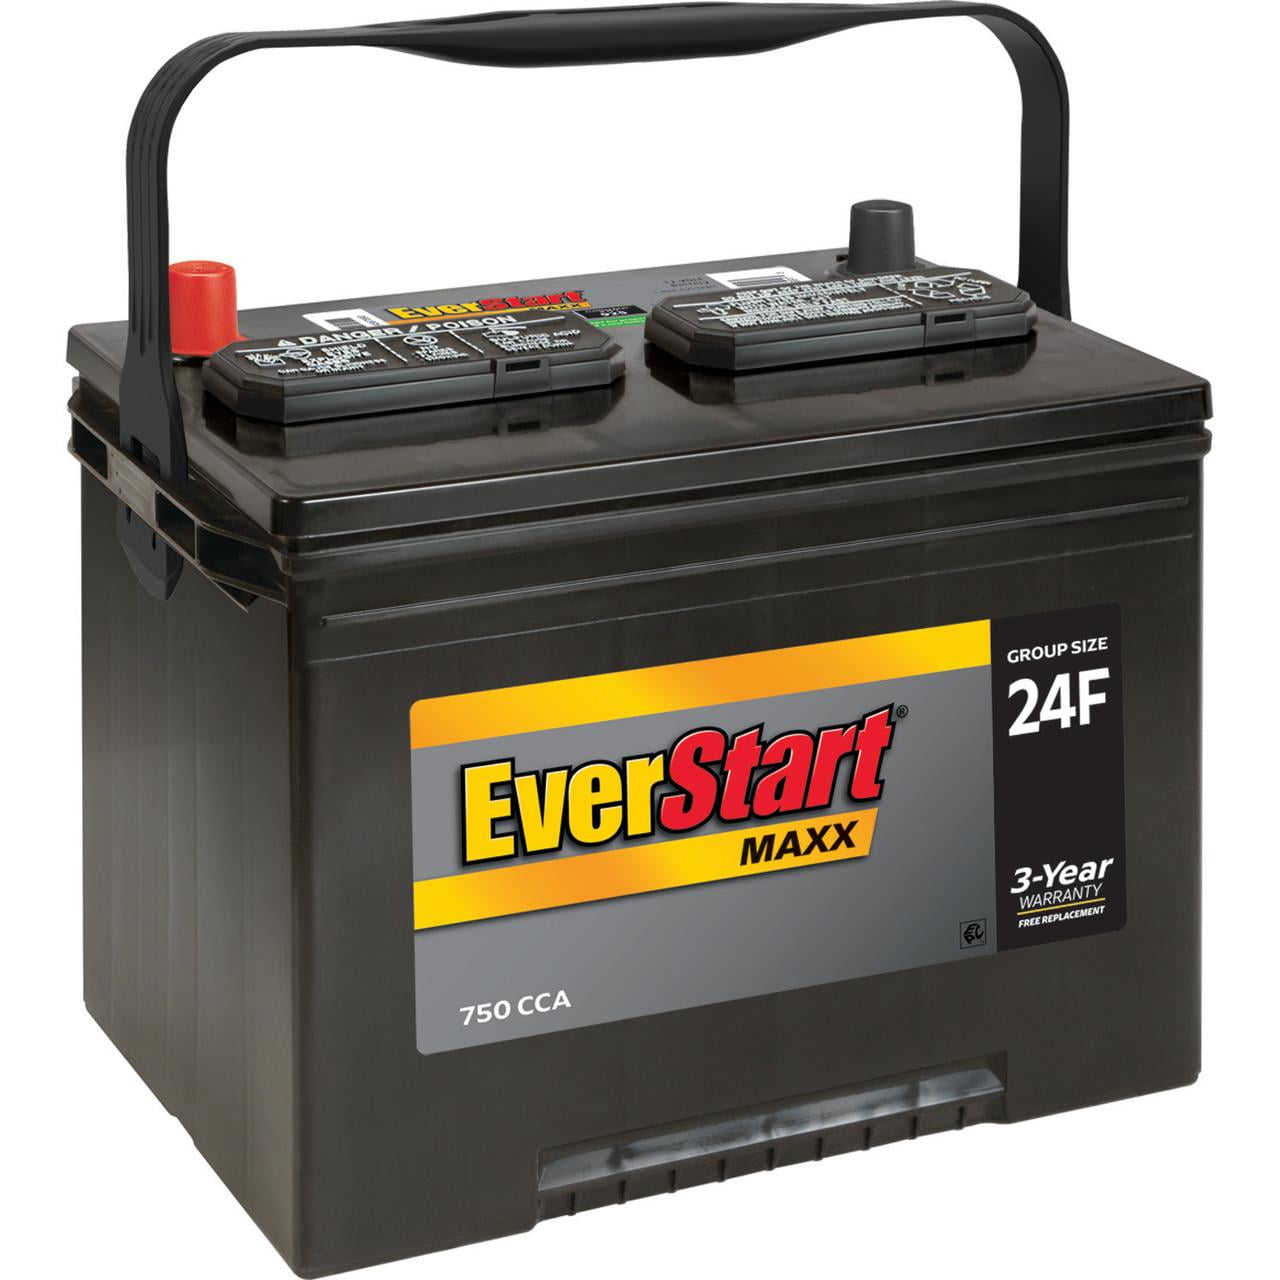 everstart-maxx-lead-acid-automotive-battery-group-size-24f-honda-cr